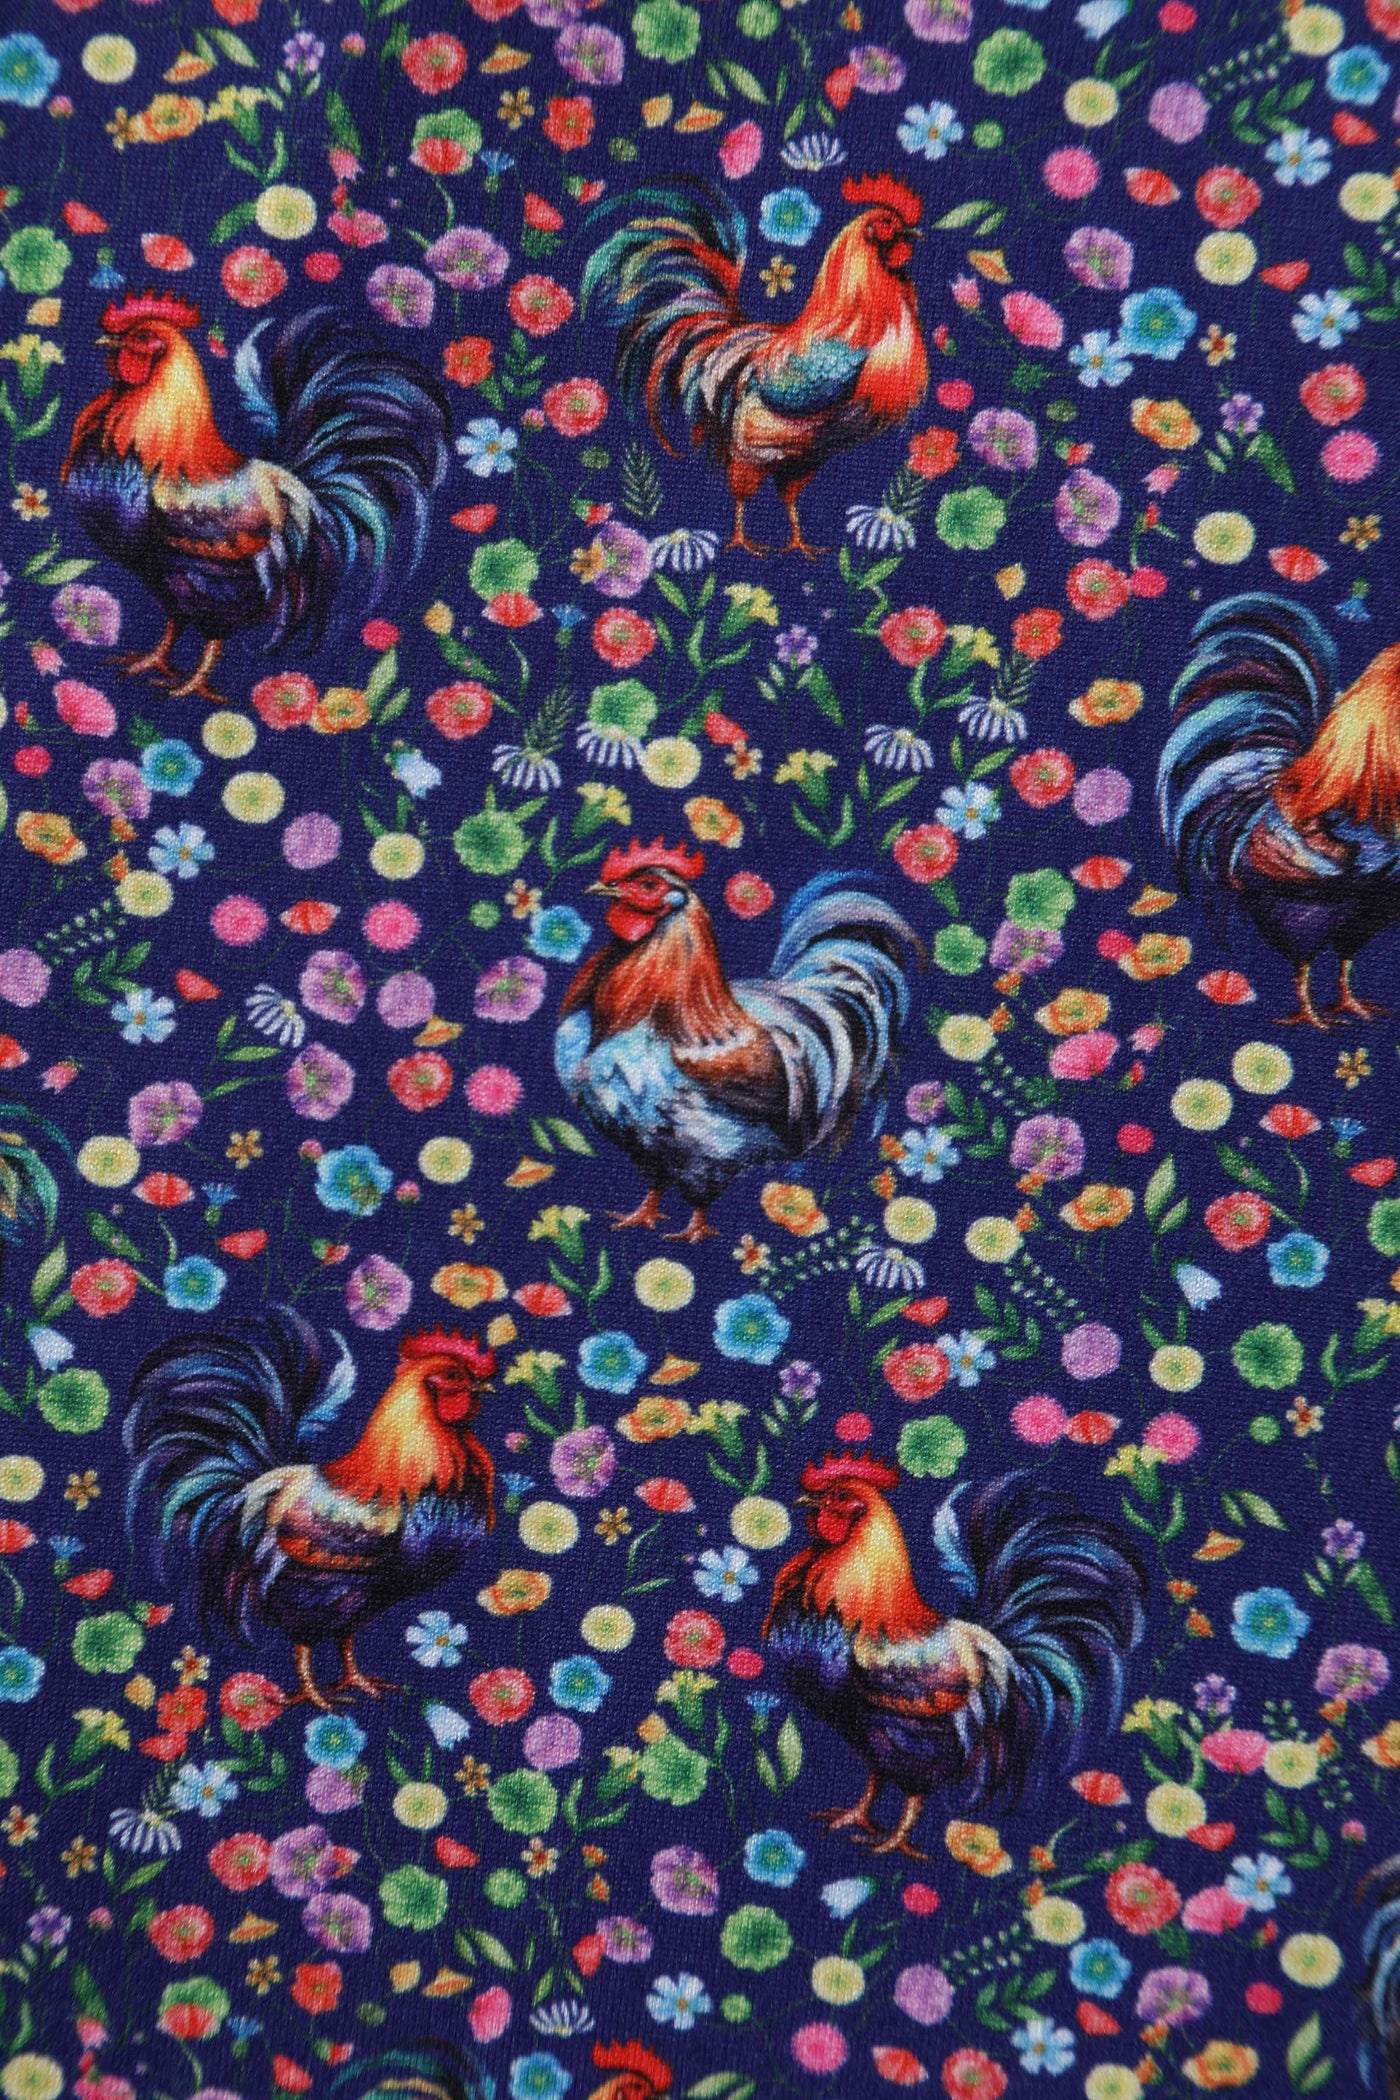 Janice Purple Sleeved Tea Dress in Rooster Floral Print